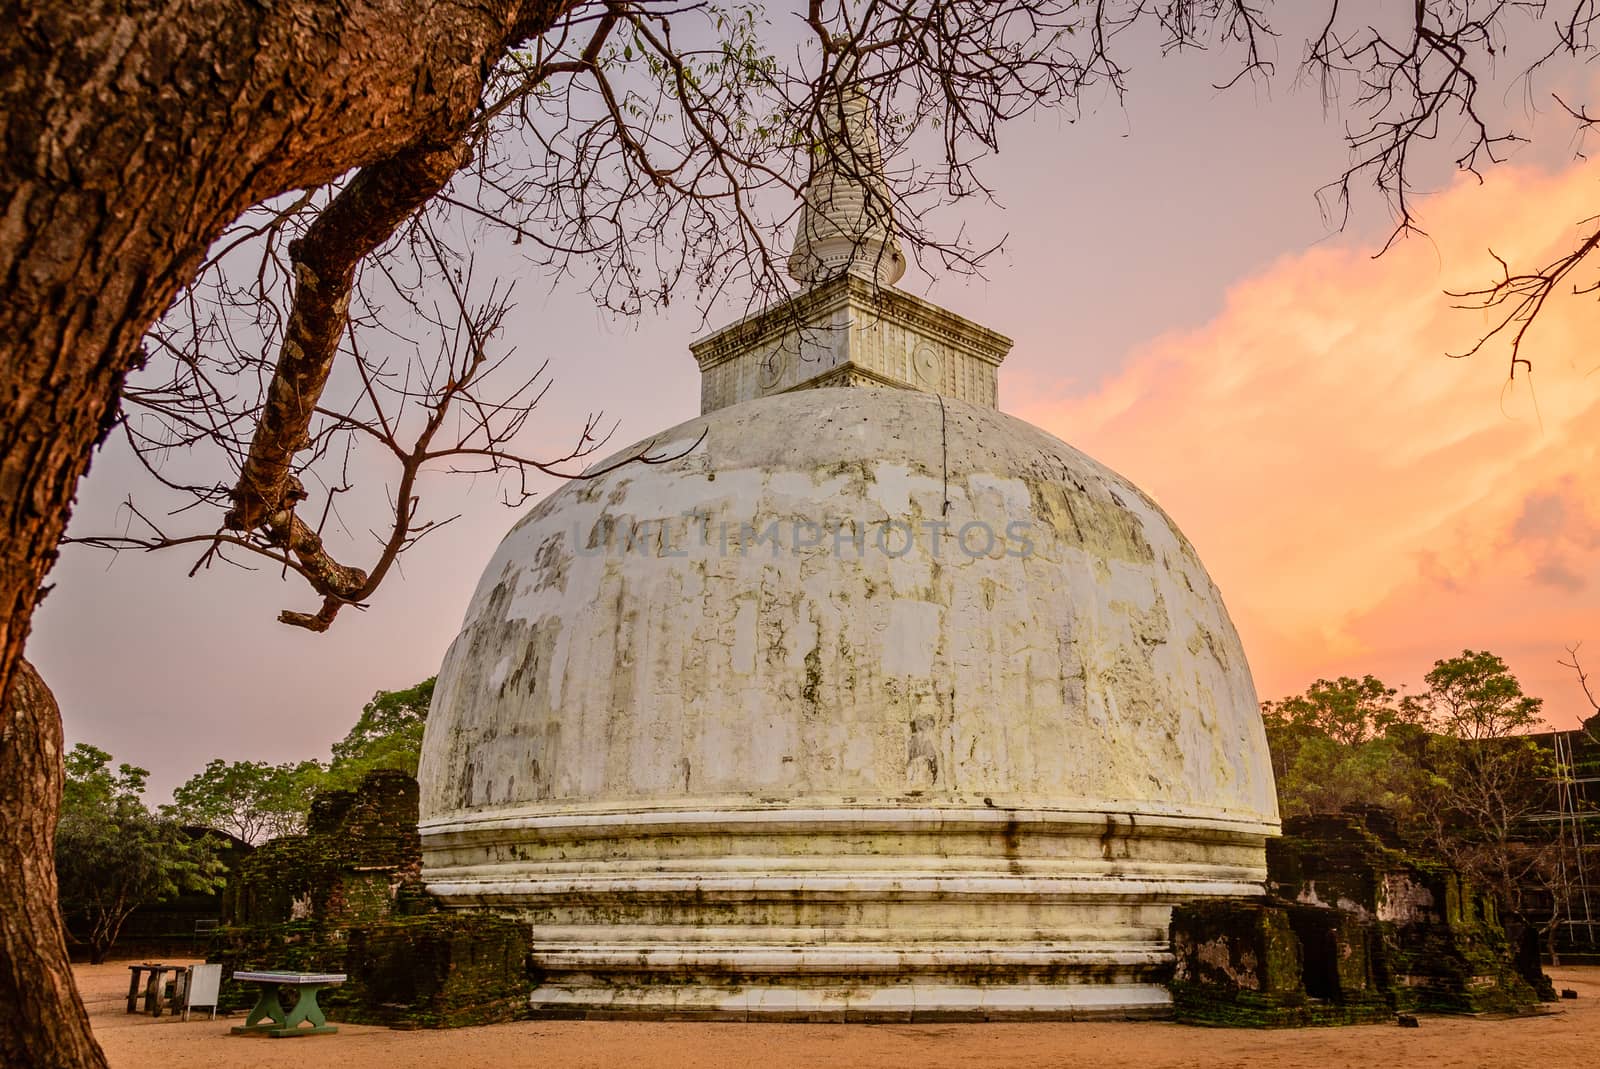 Kiri Vehere old buddhist stupa temple at sunset time, Polonnaruw by ambeon